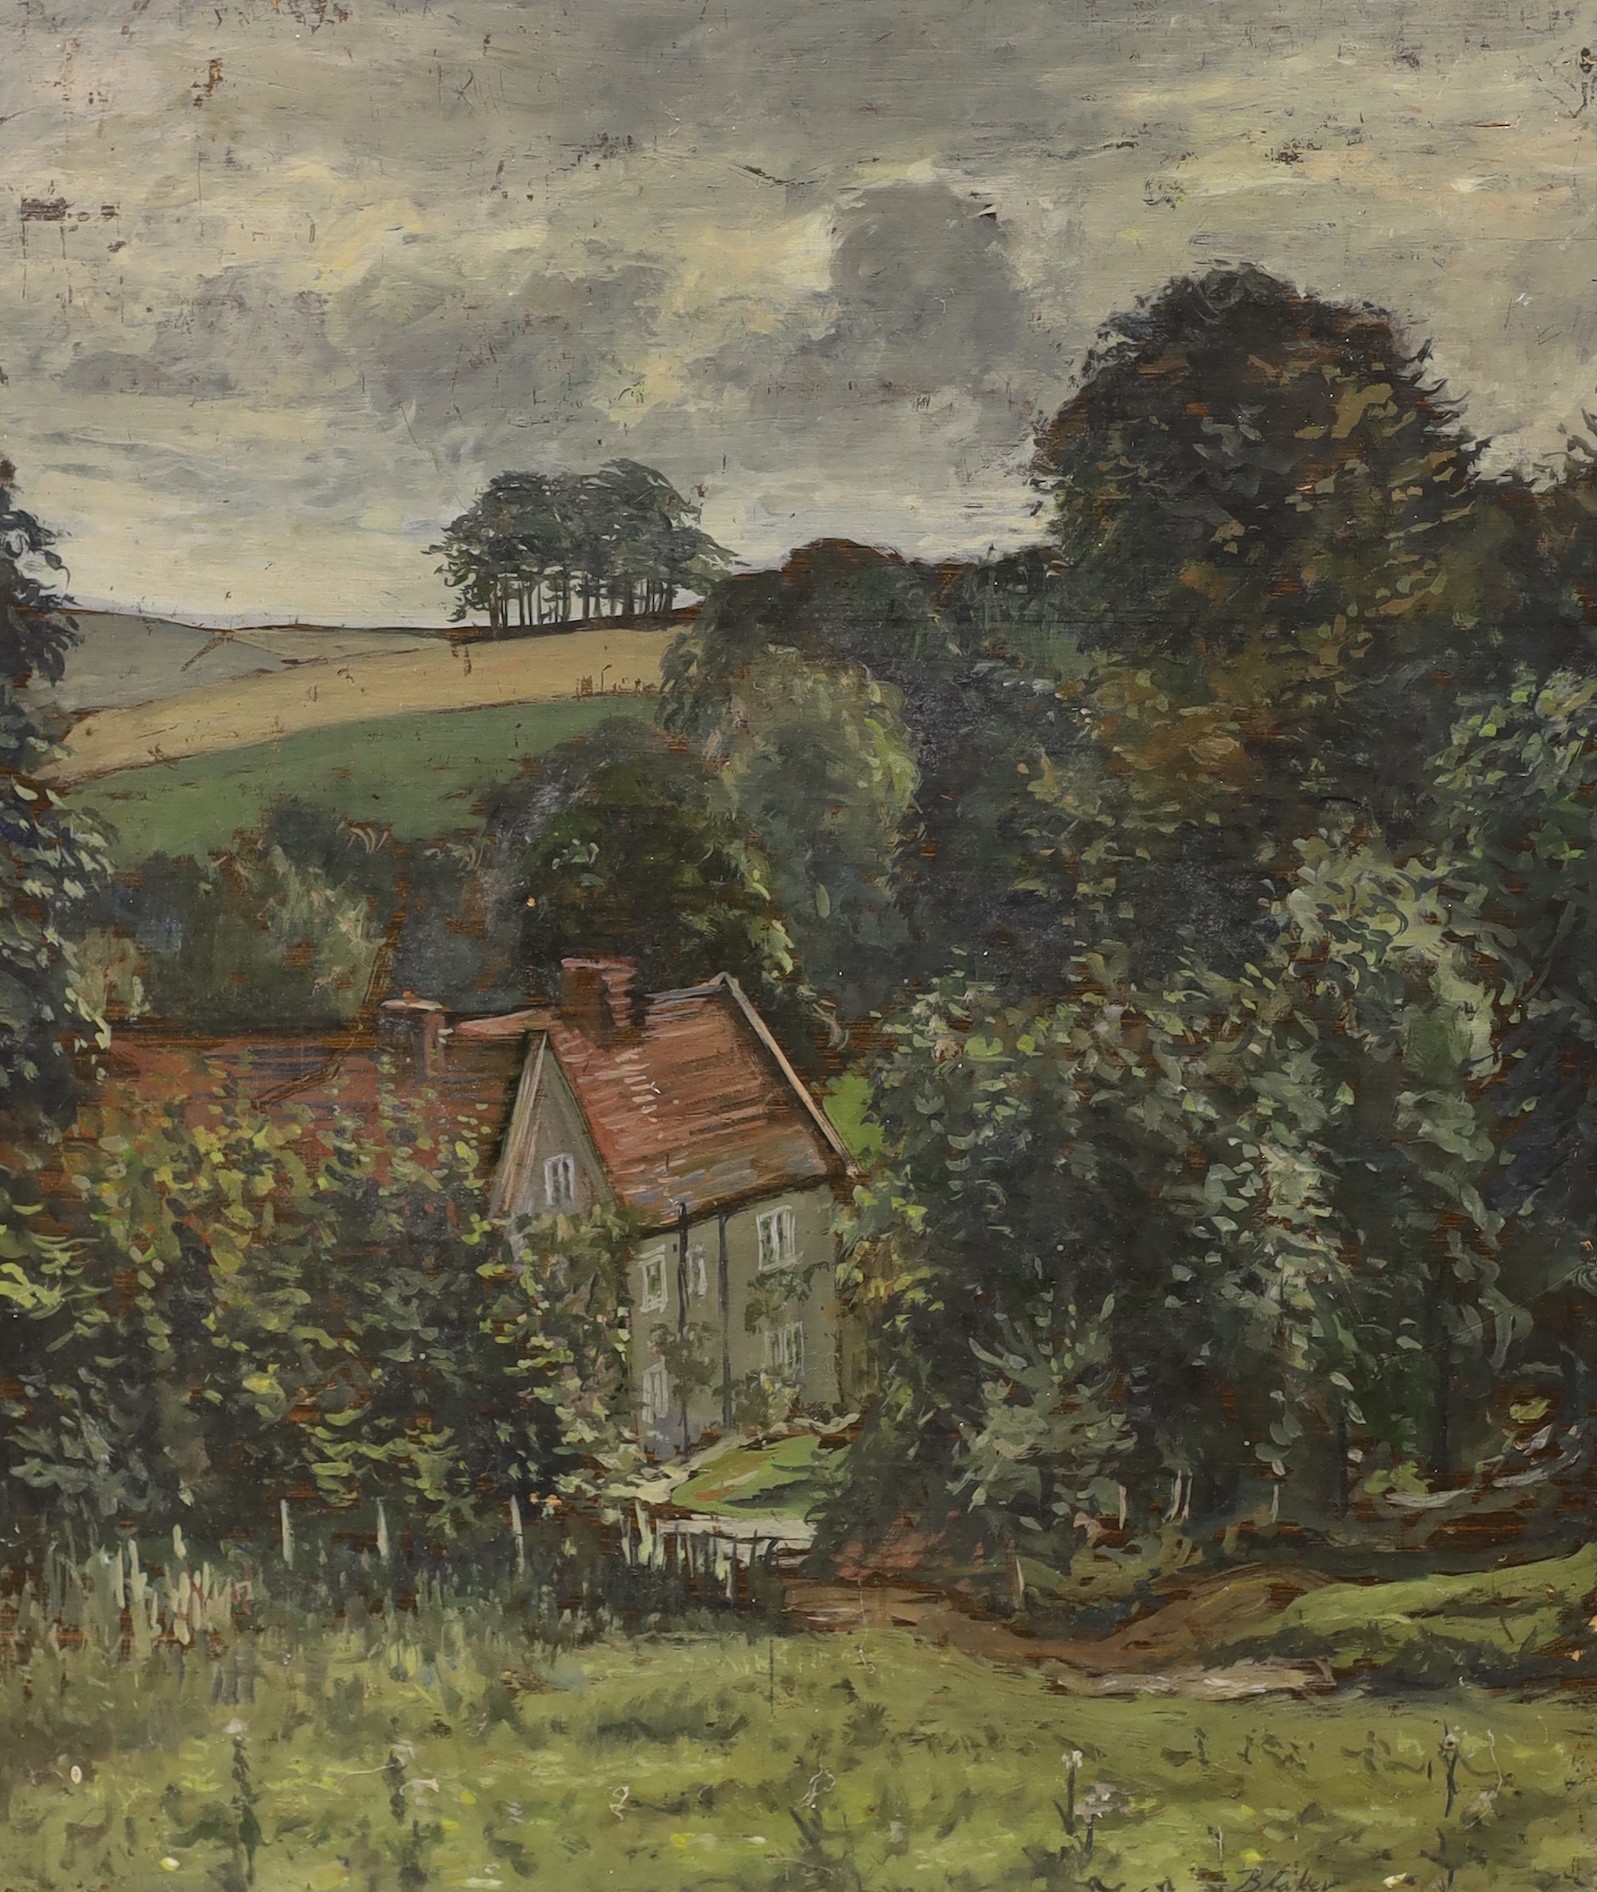 Michael Blaker (1928-2018), oil on wooden panel, House in a landscape, signed, 52 x 45cm, unframed